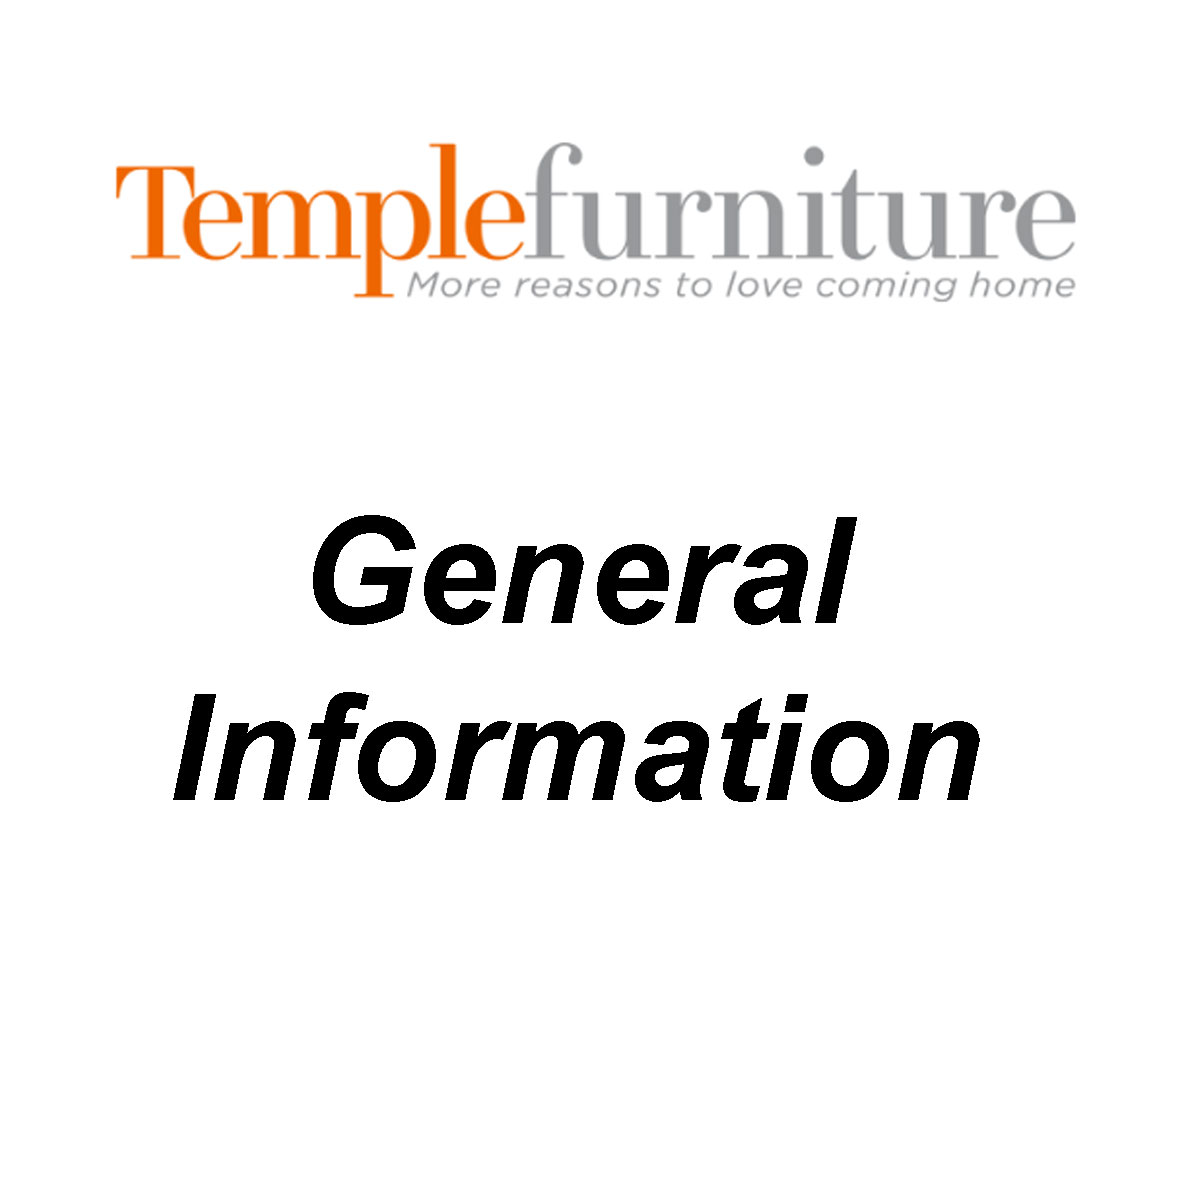   Temple Furniture General Information